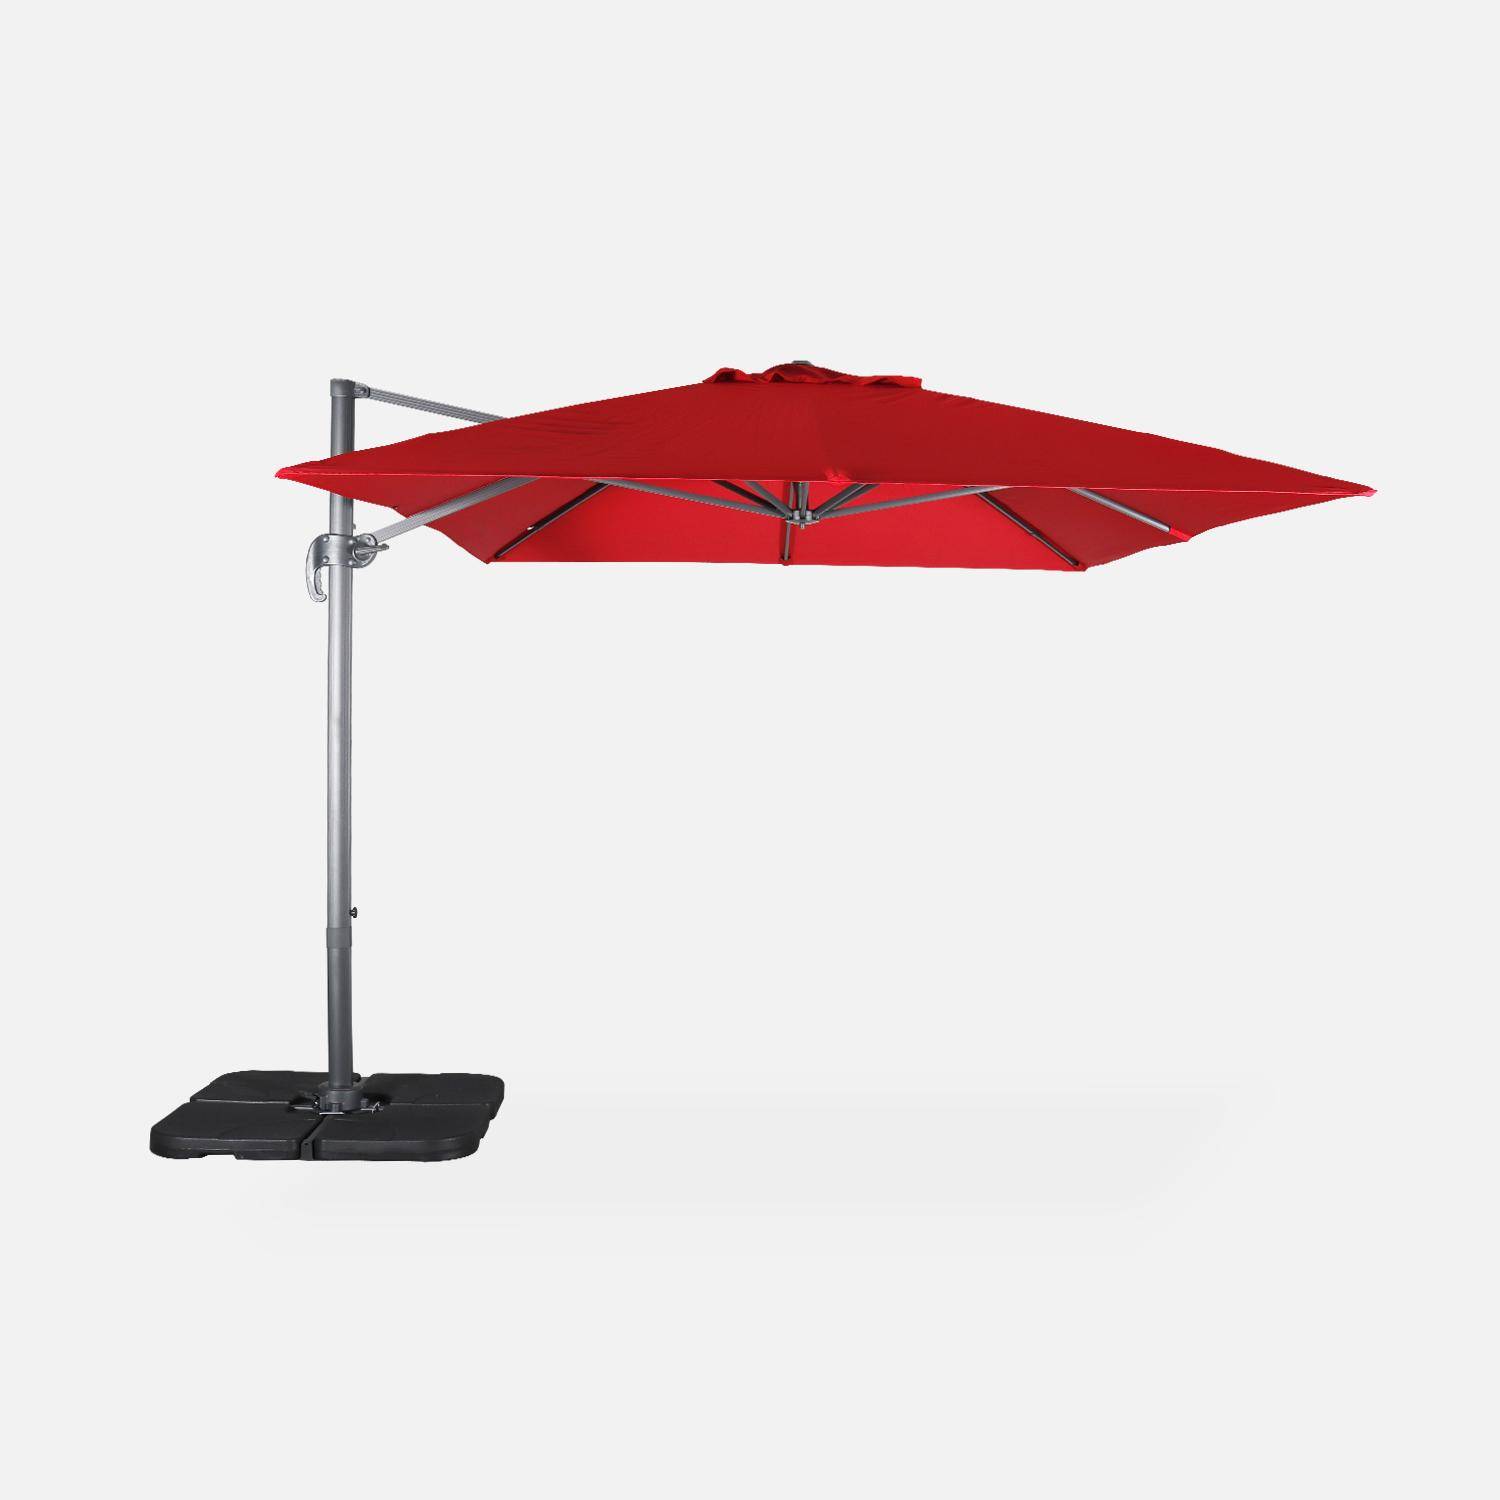 Rode rechthoekige parasol 3x4m + verzwaarde tegels 50x50cm,sweeek,Photo9